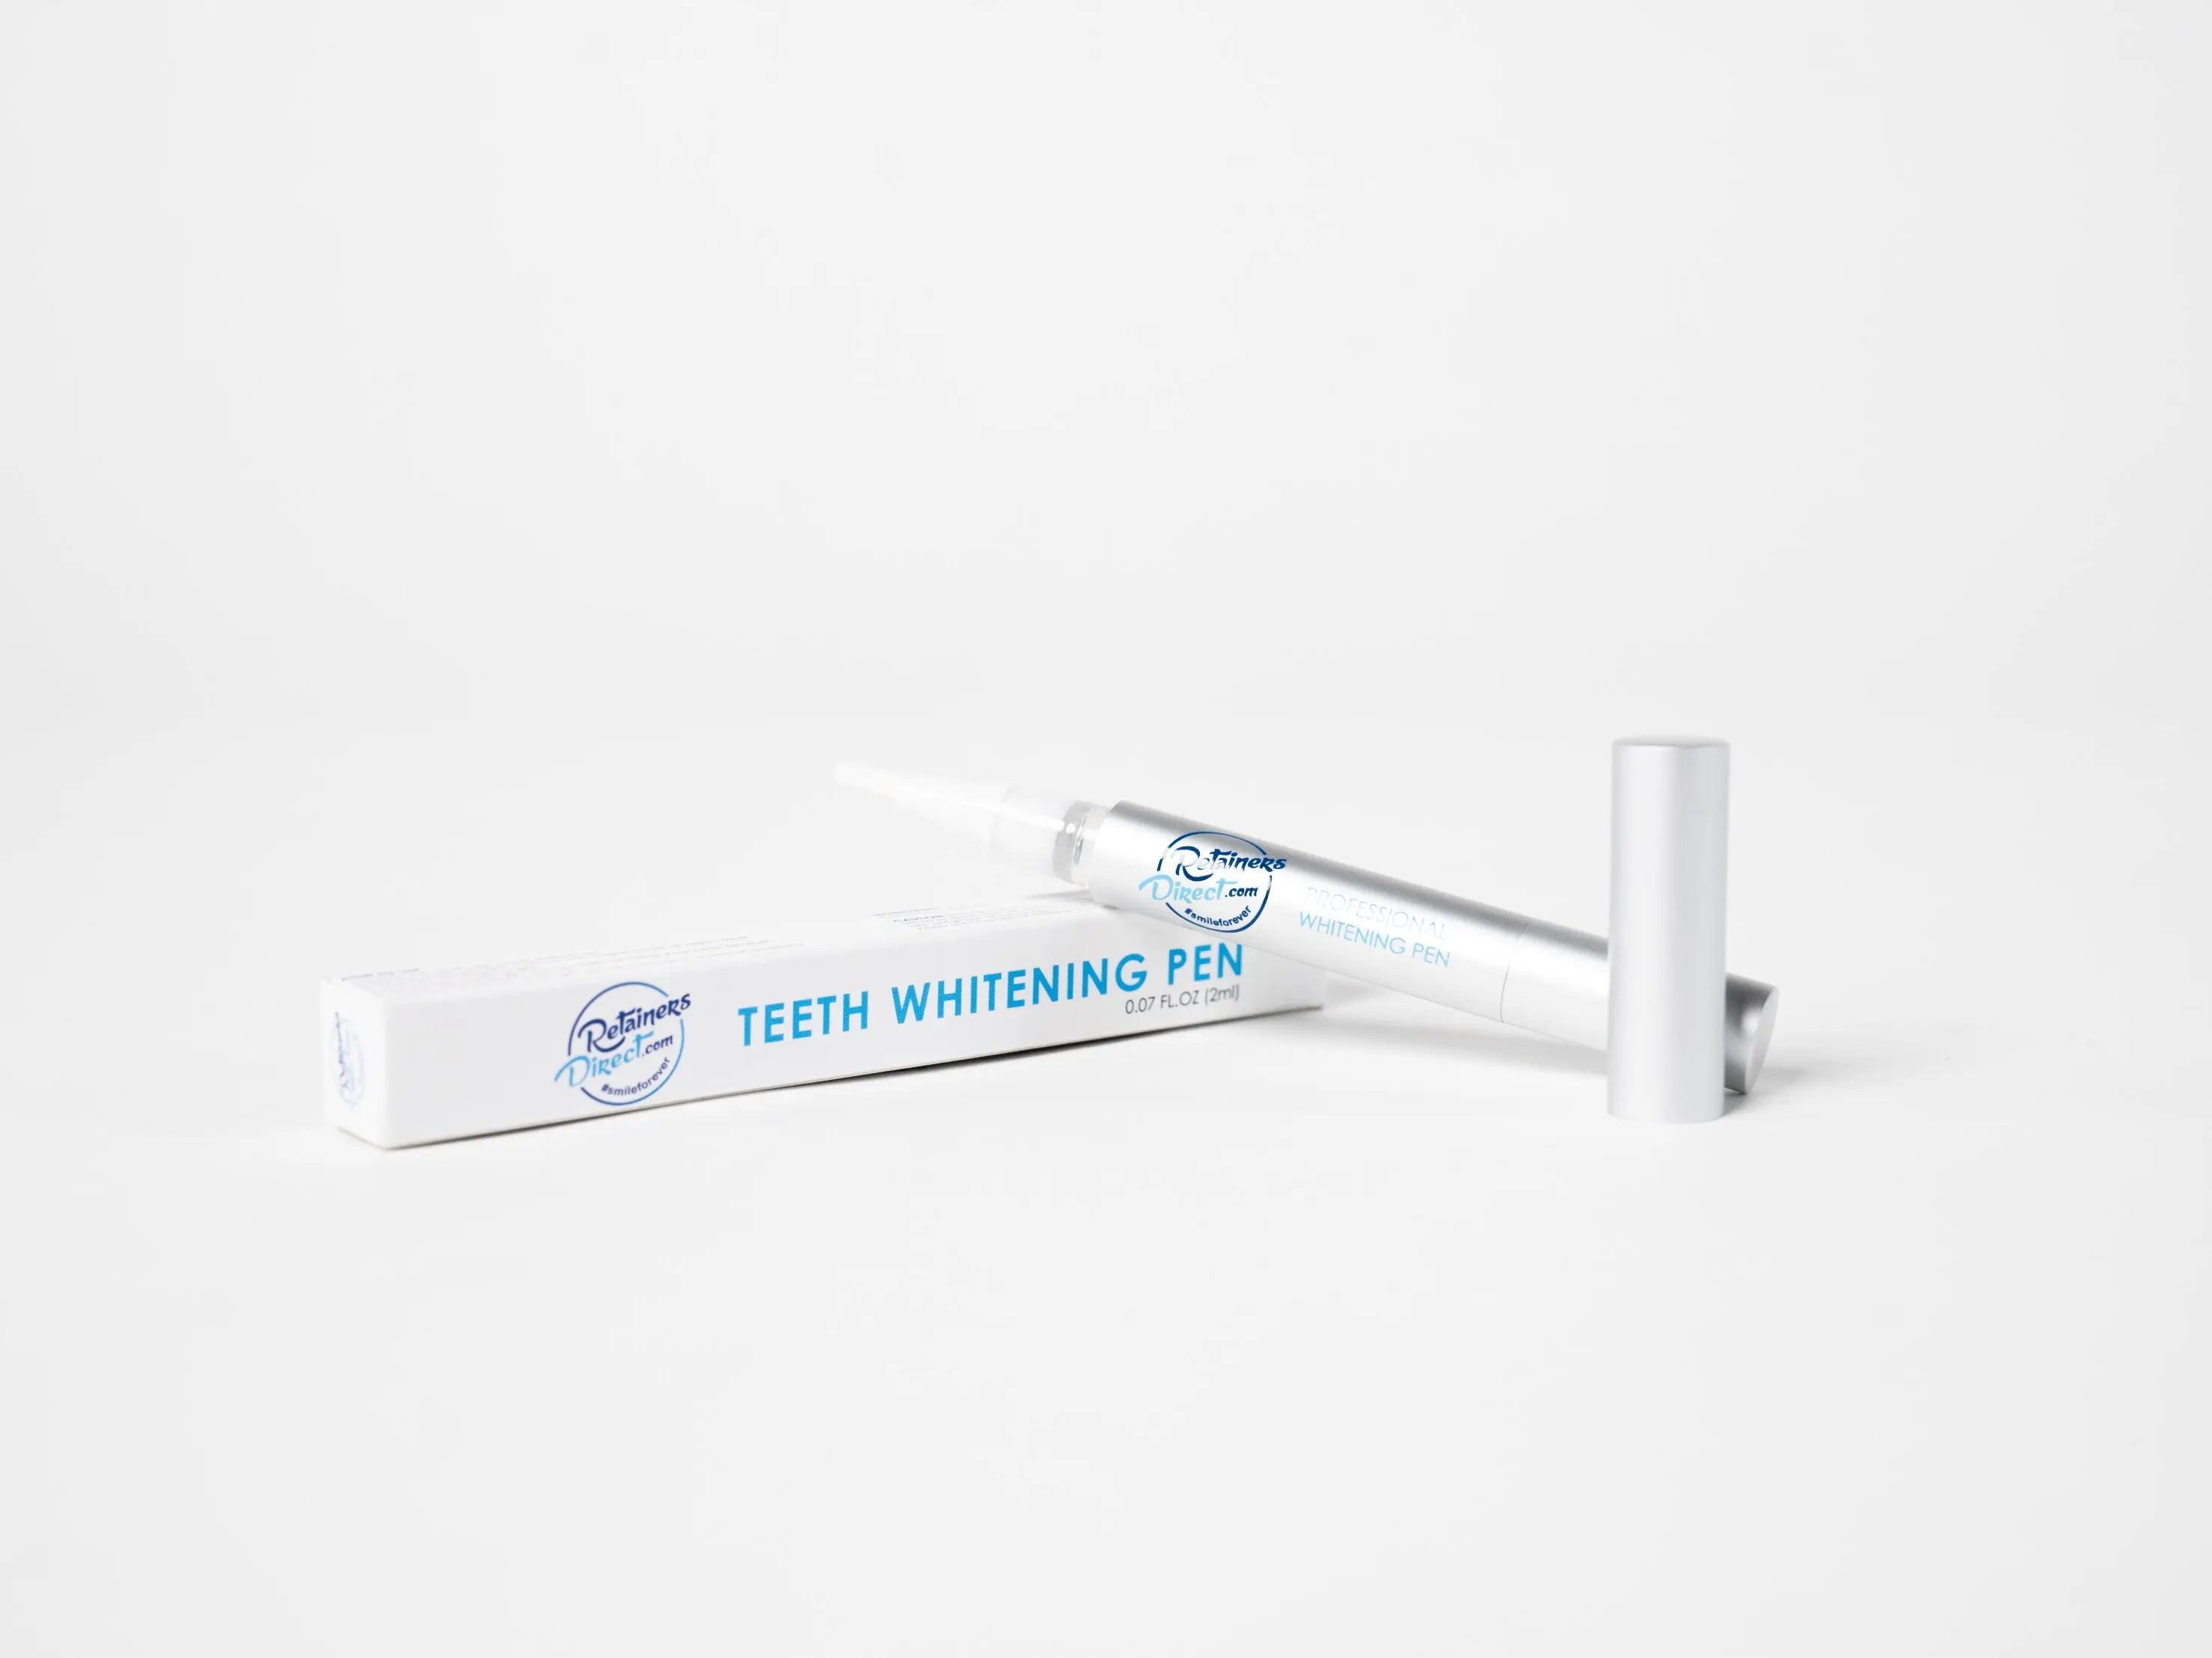 TEETH WHITENING PEN retainersdirect